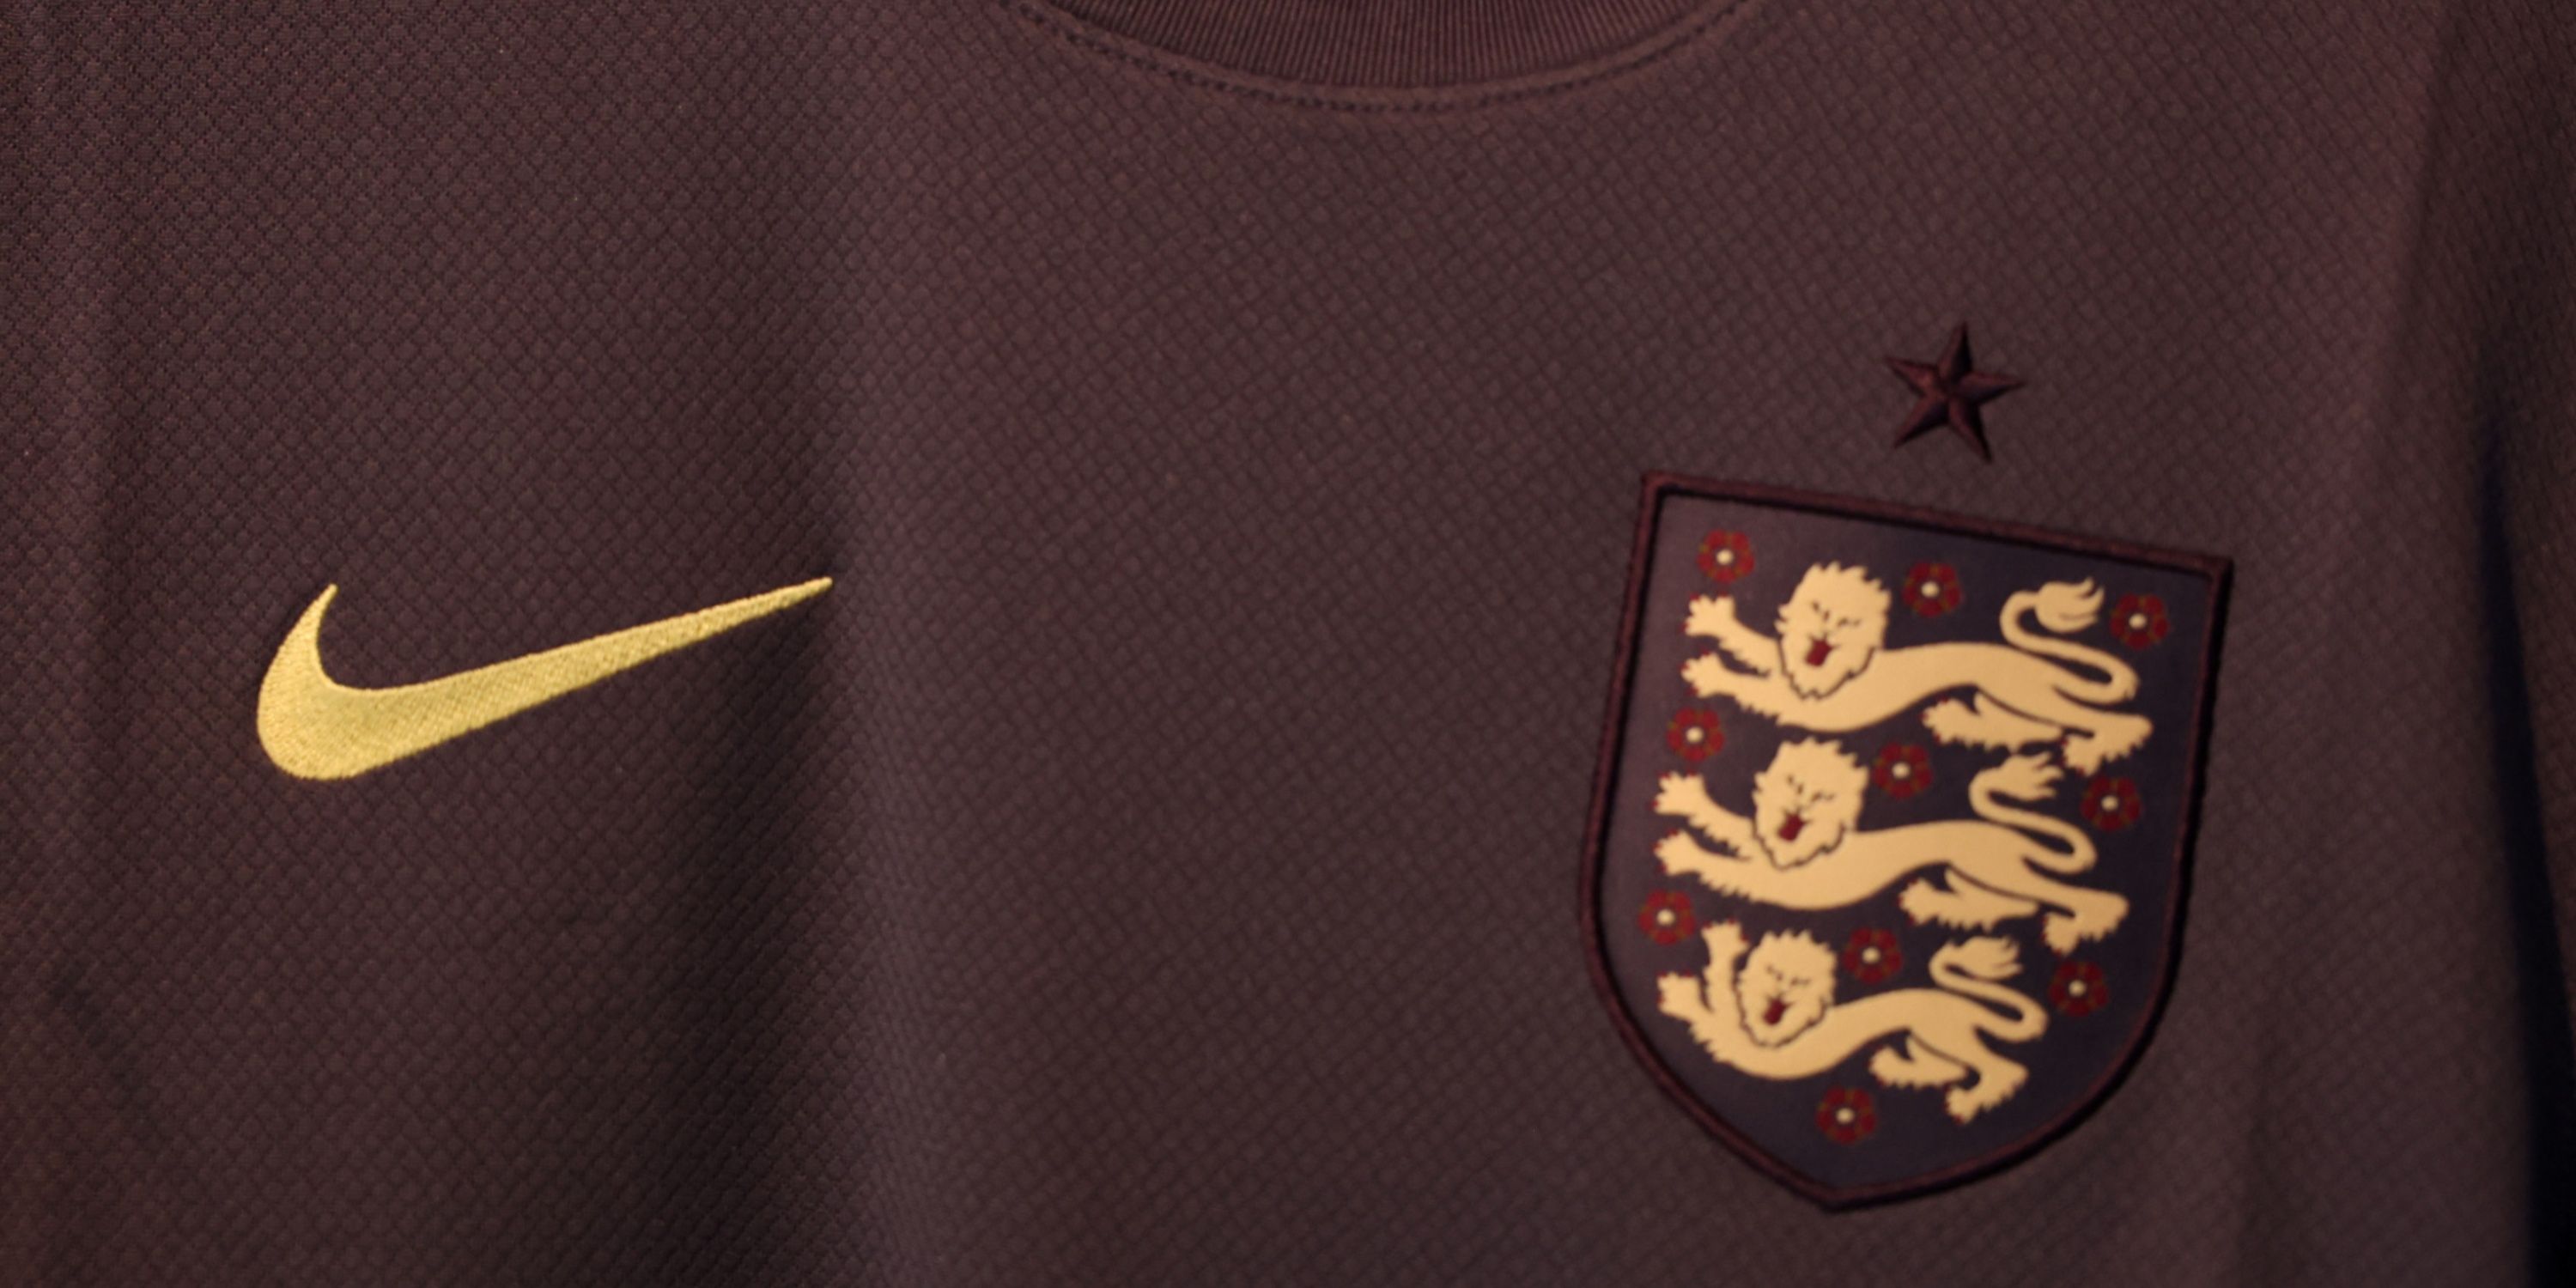 England away kit